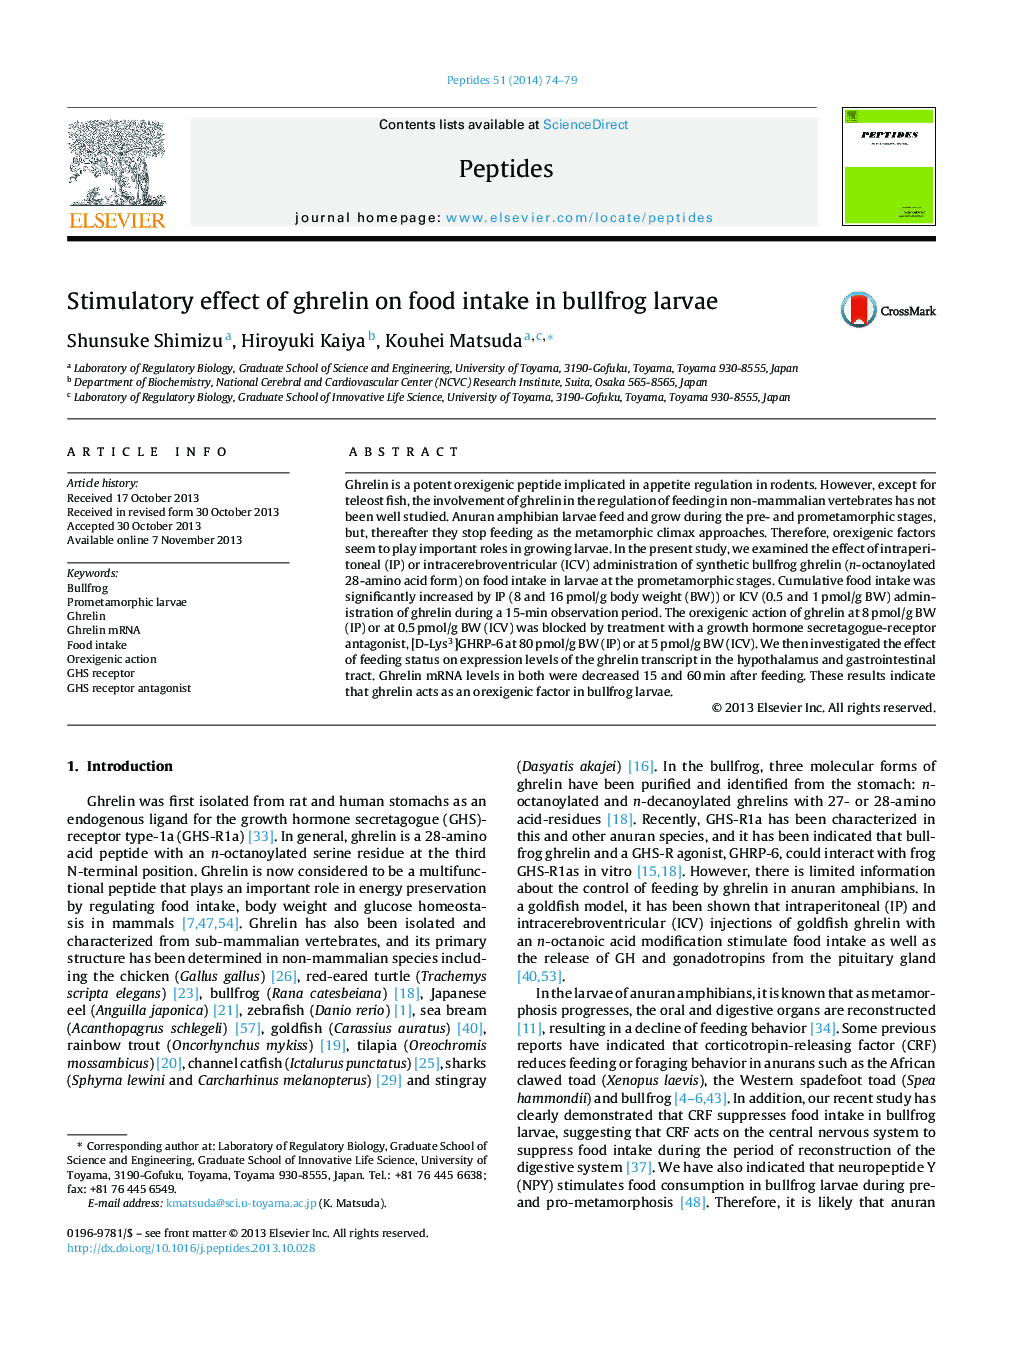 Stimulatory effect of ghrelin on food intake in bullfrog larvae